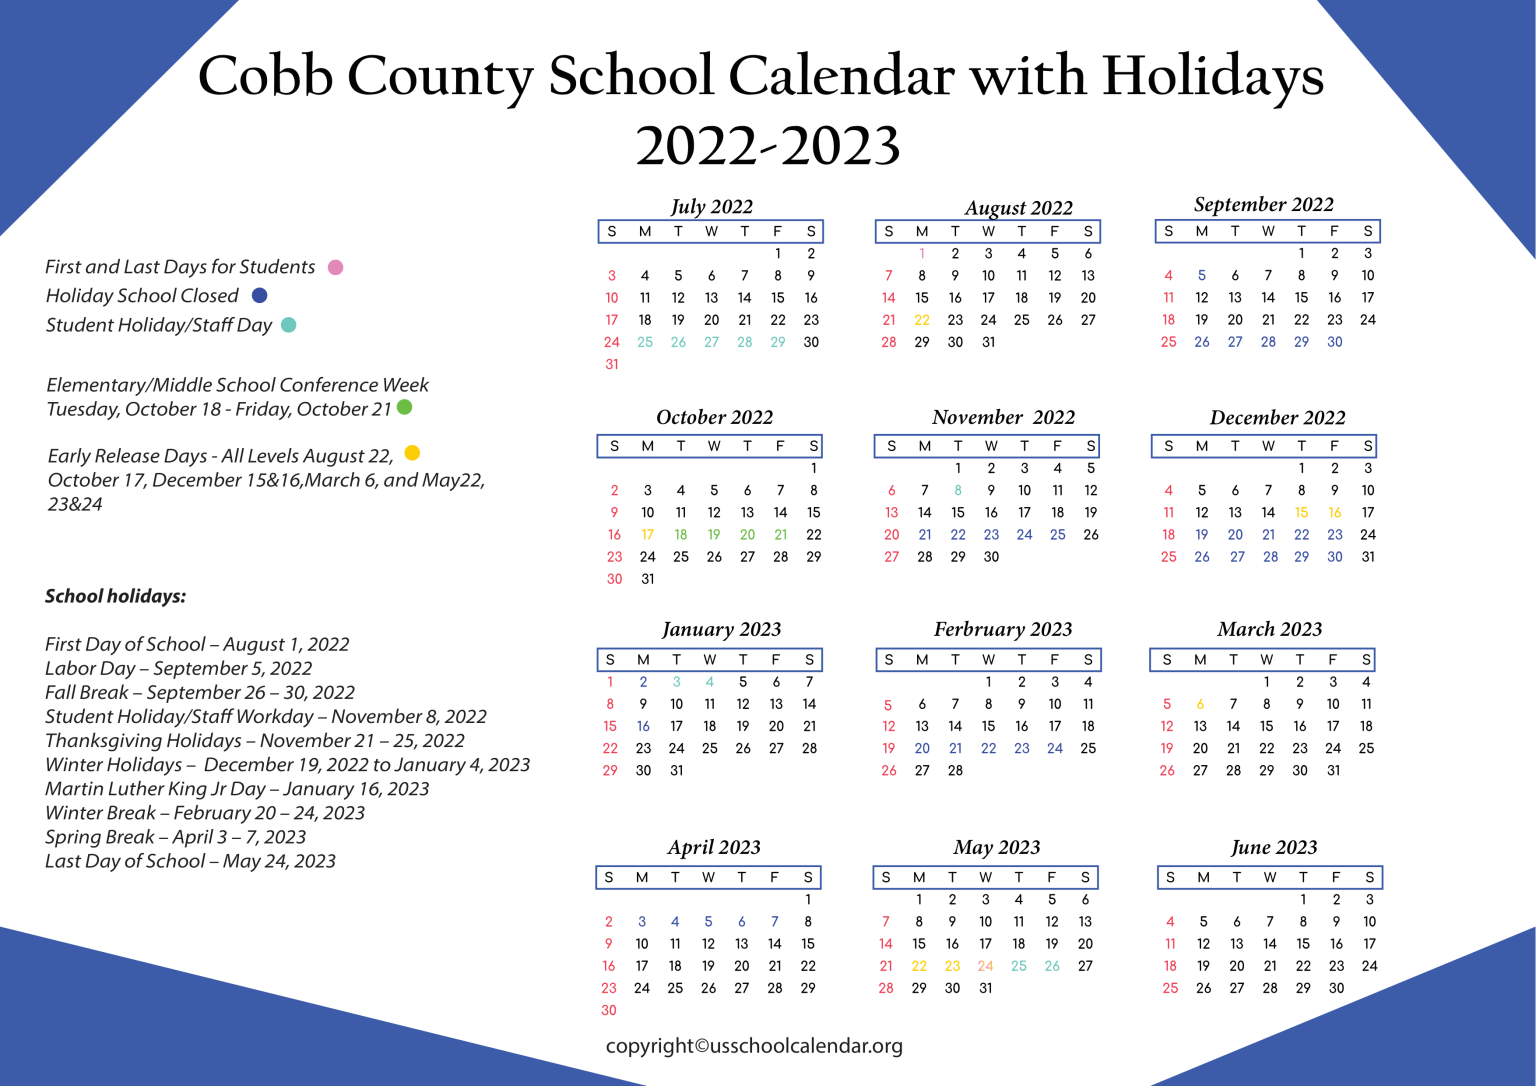 Cobb County Spring Break 2024 ange maureen